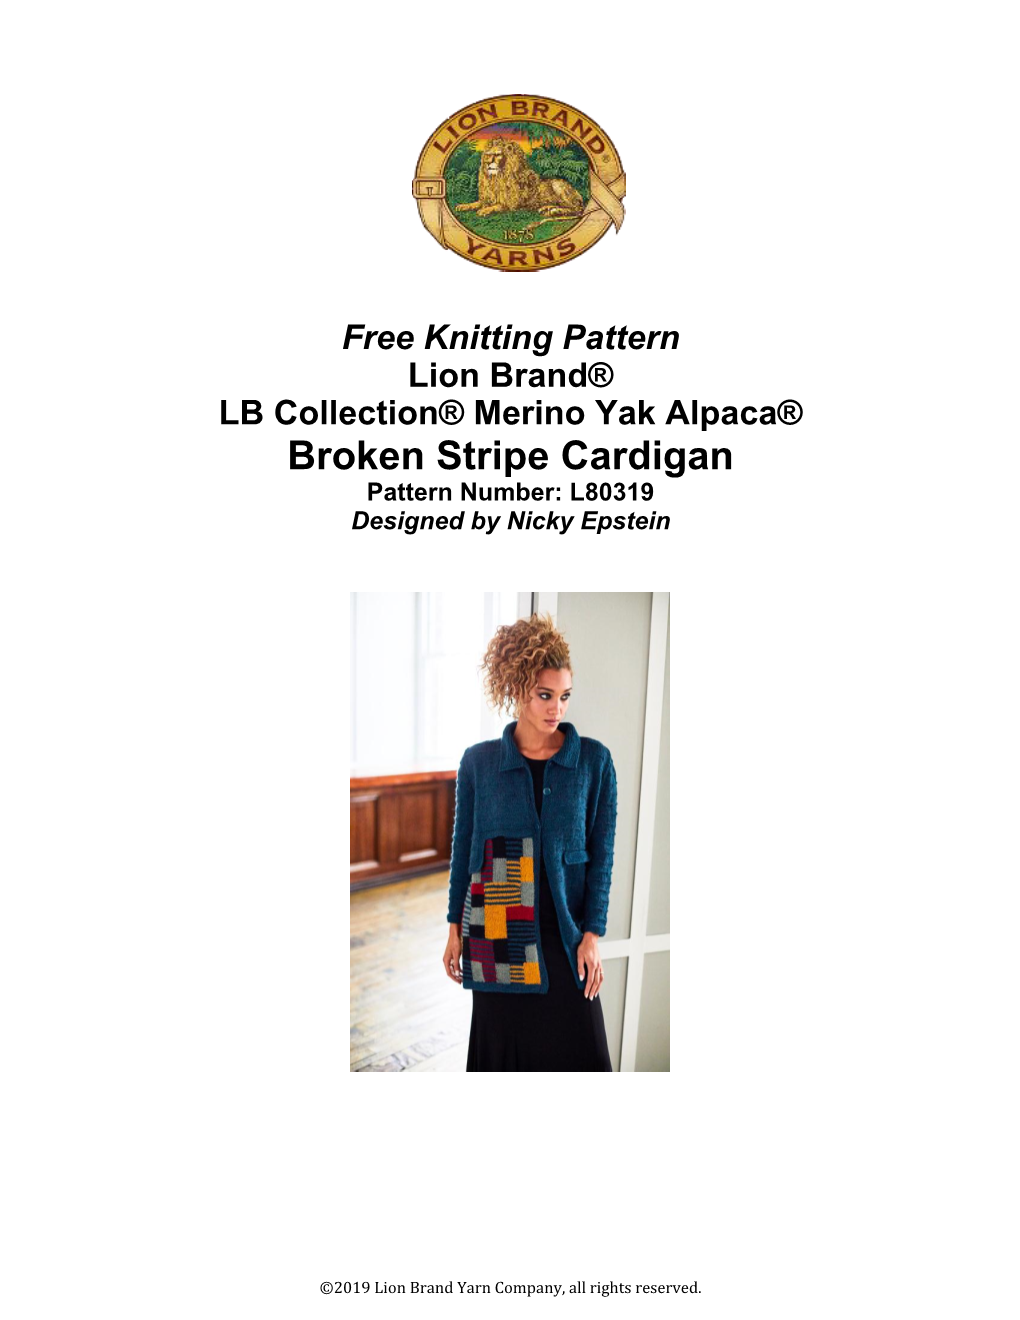 Broken Stripe Cardigan Pattern Number: L80319 Designed by Nicky Epstein